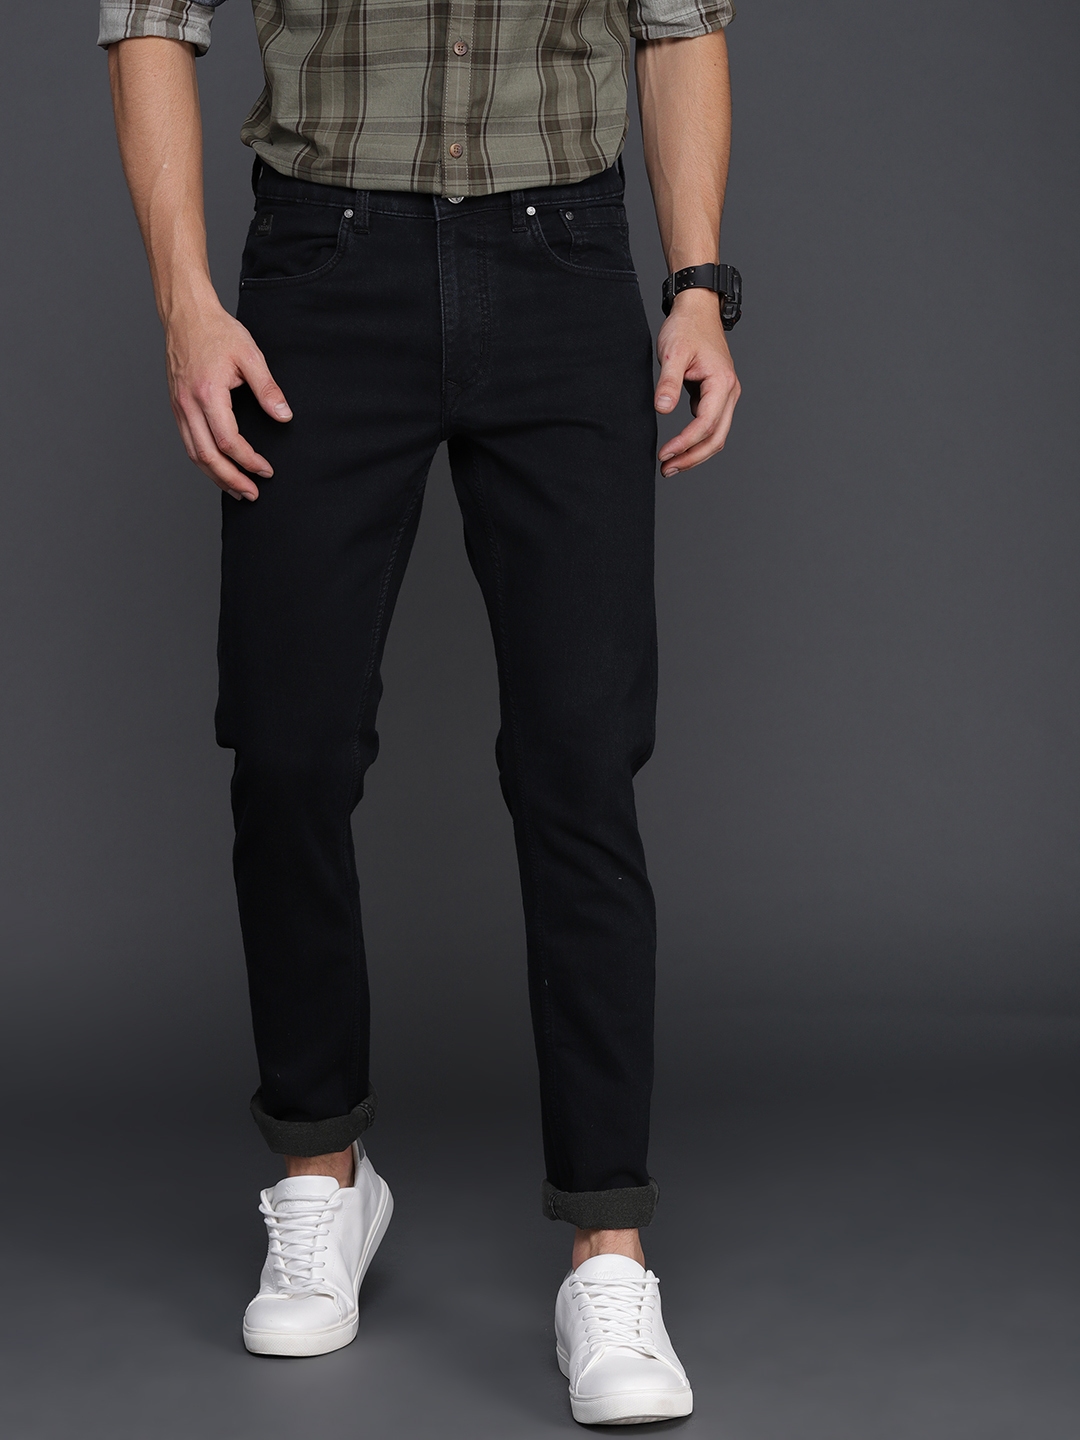 black jeans on myntra